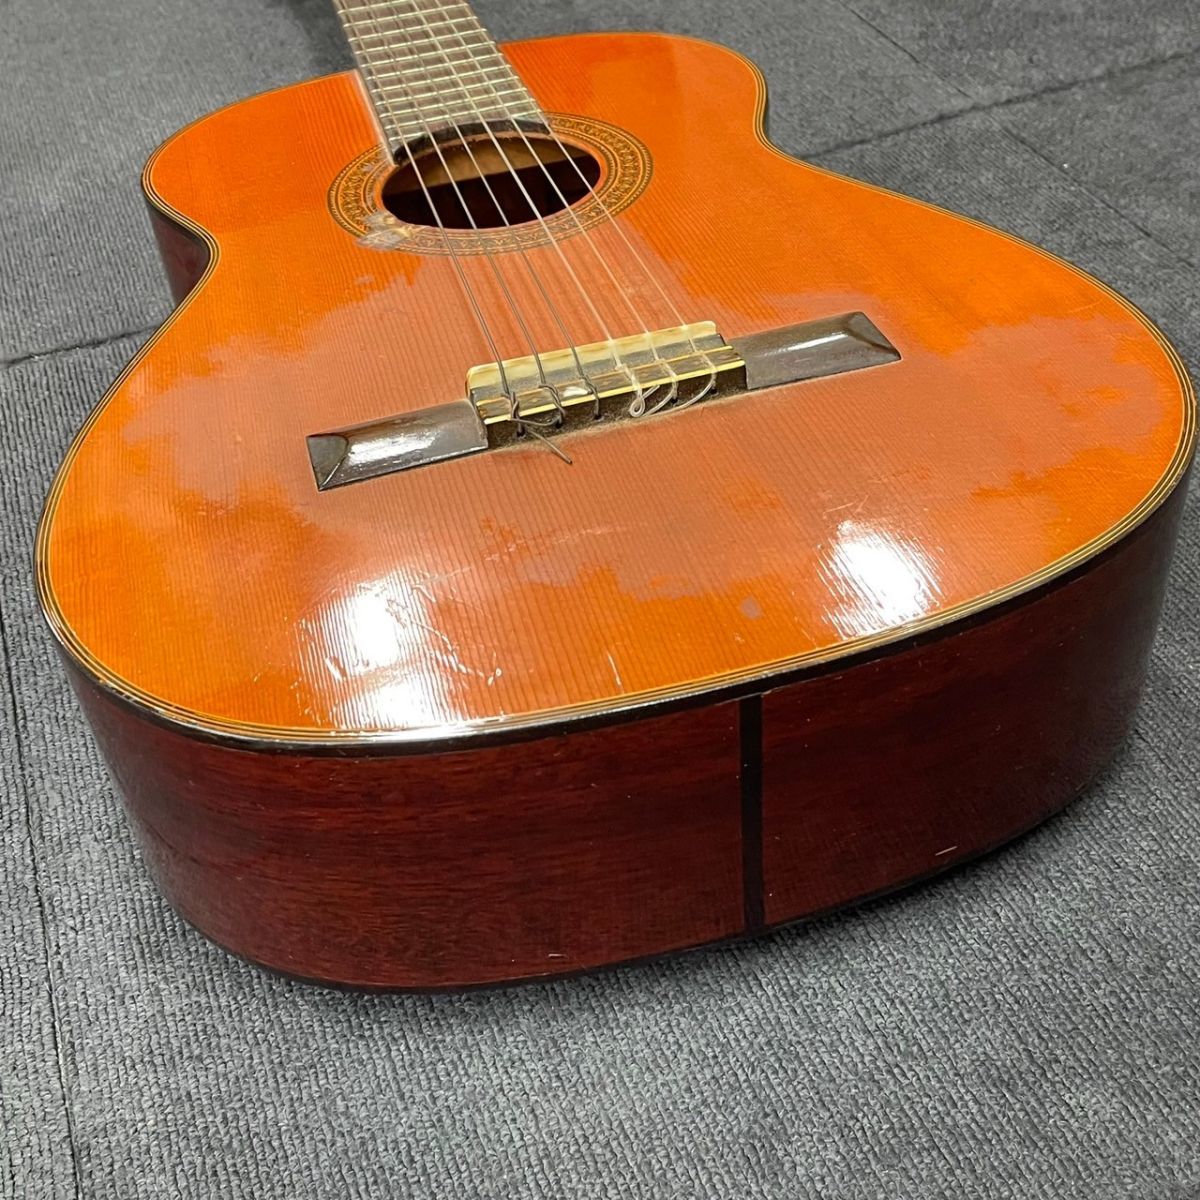 K805-O18-2621 Shinano Guitar シナノ ギター クラッシックギター MODEL No.200 MADE IN JAPAN 日本製 6弦 弦楽器 ソフトケース付き ③_画像10